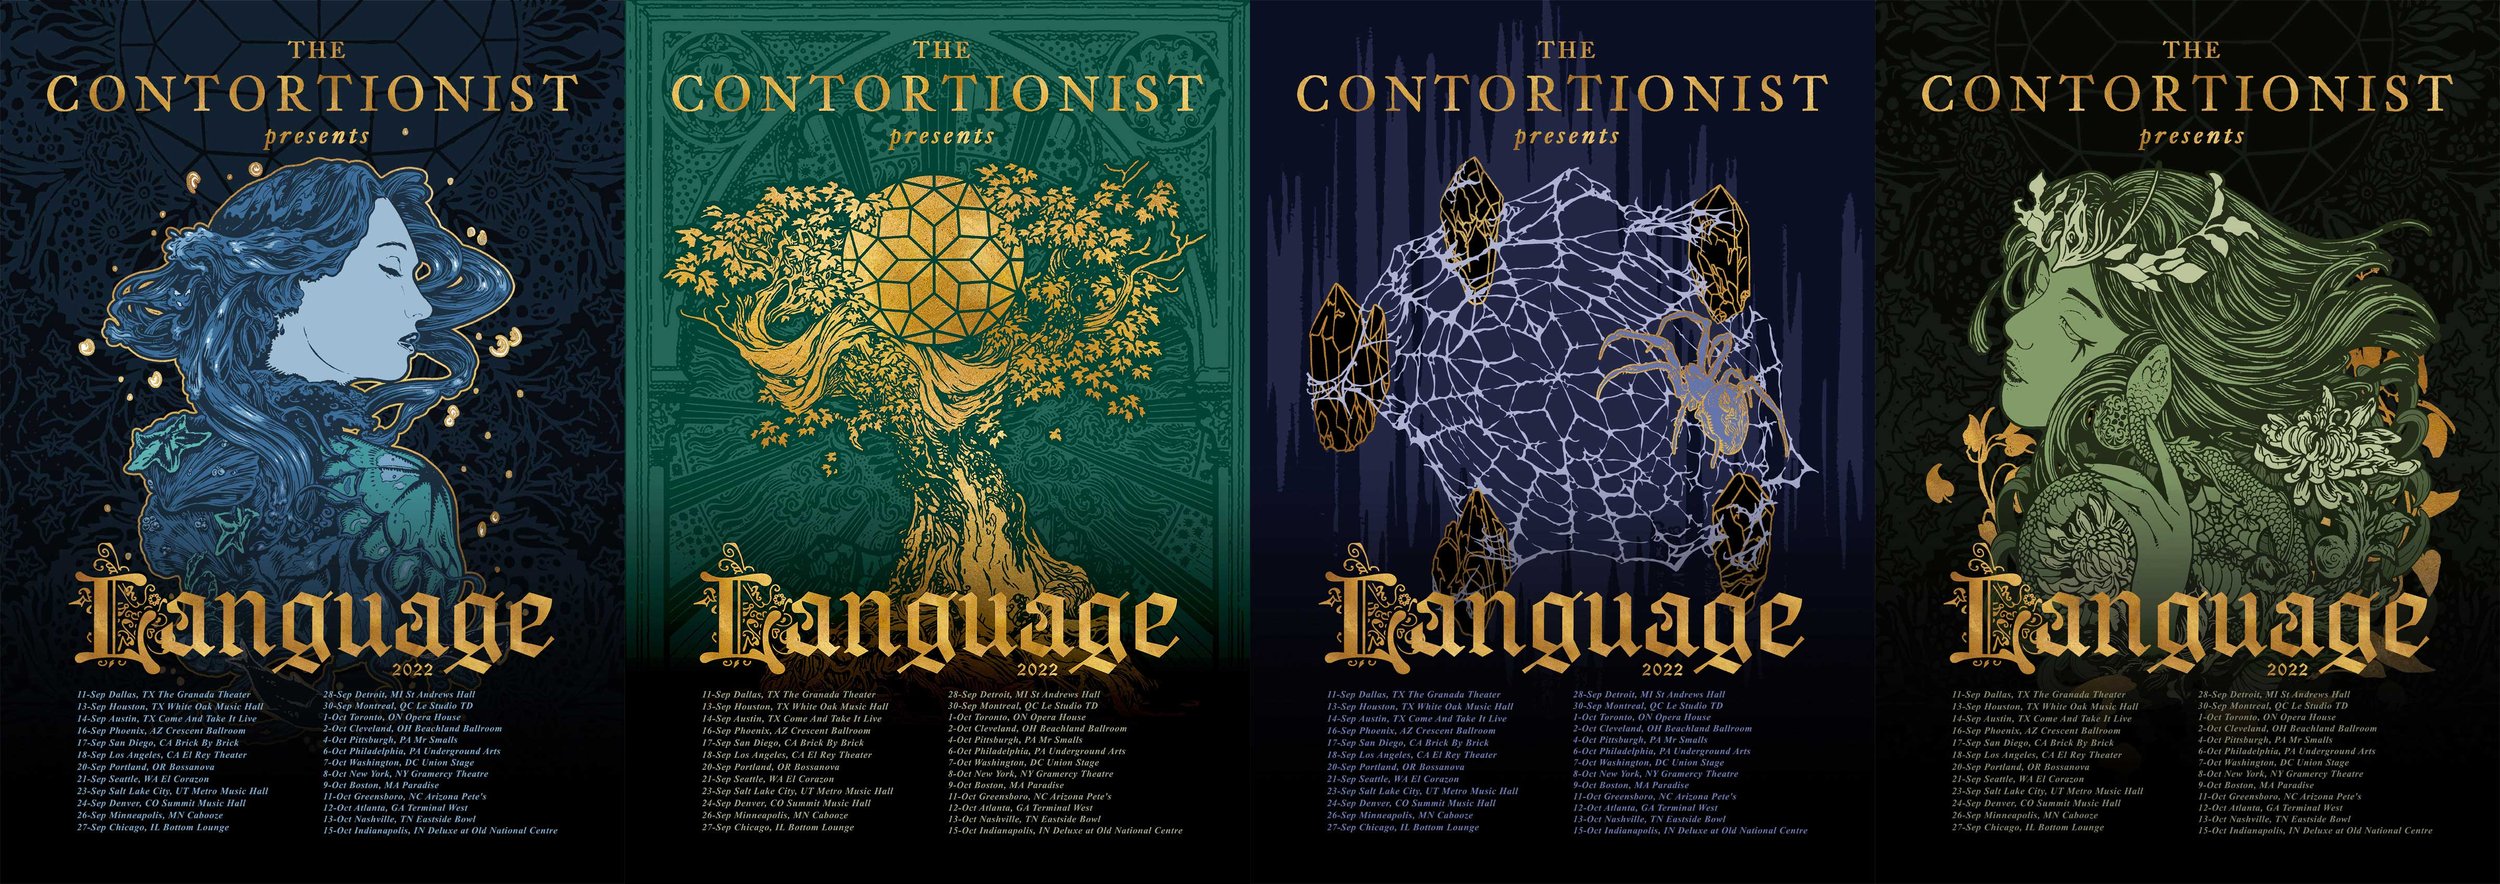 10-poster-Language-Contortionist-artwork-golden-illustration-antique-book-cover-tour.jpg